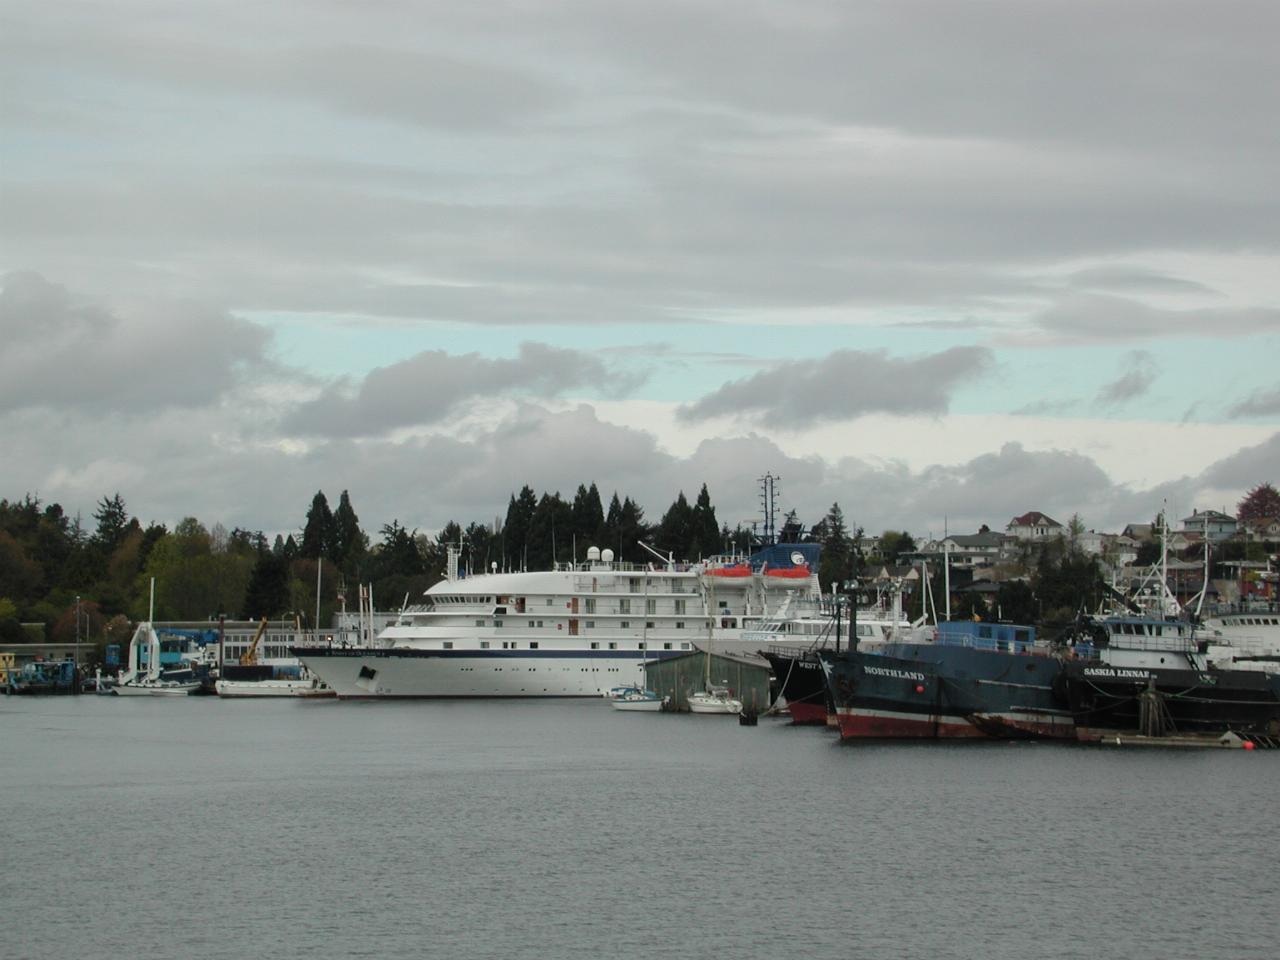 Luxury vessel near Ballard Locks